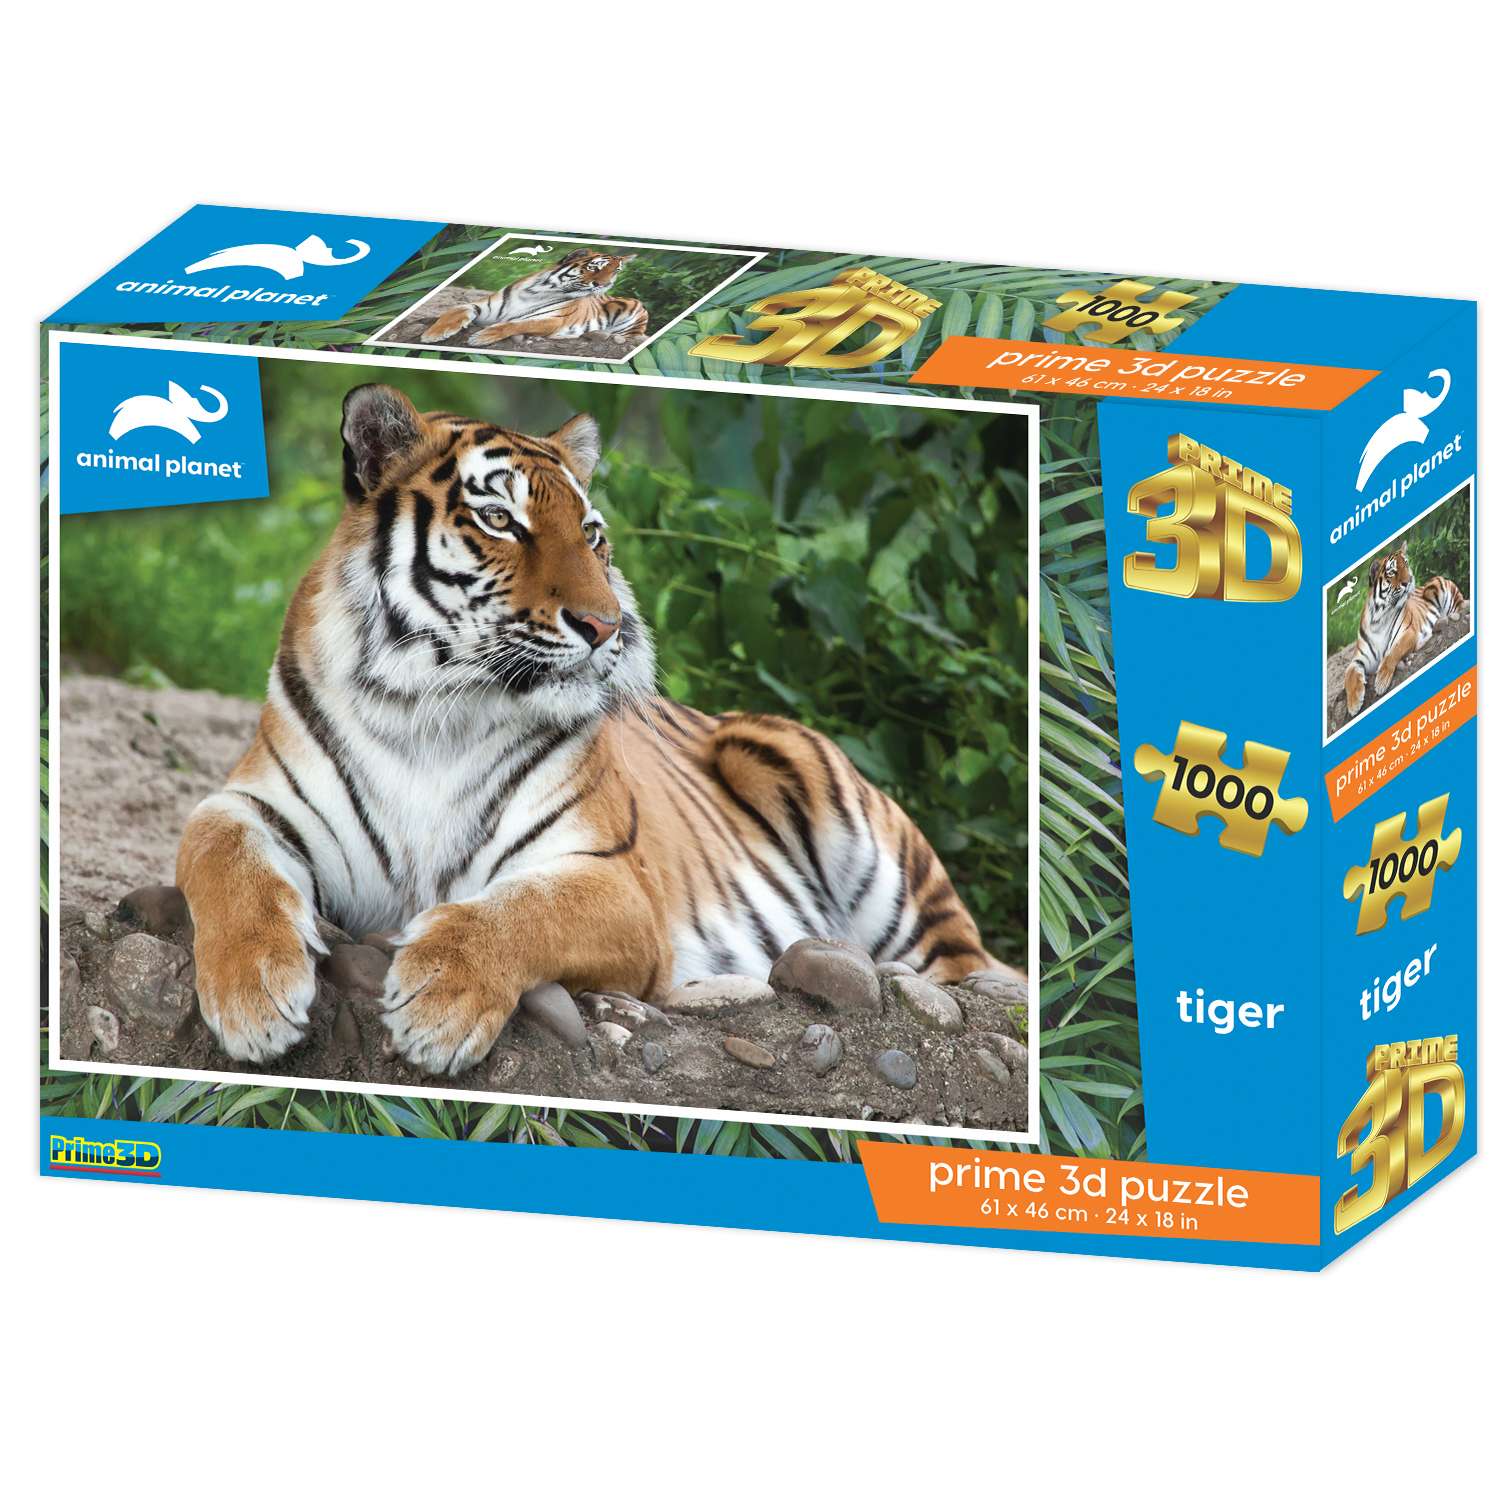 Стерео-пазл Prime 3D Тигр 1000 деталей 61 х 46 см - фото 2